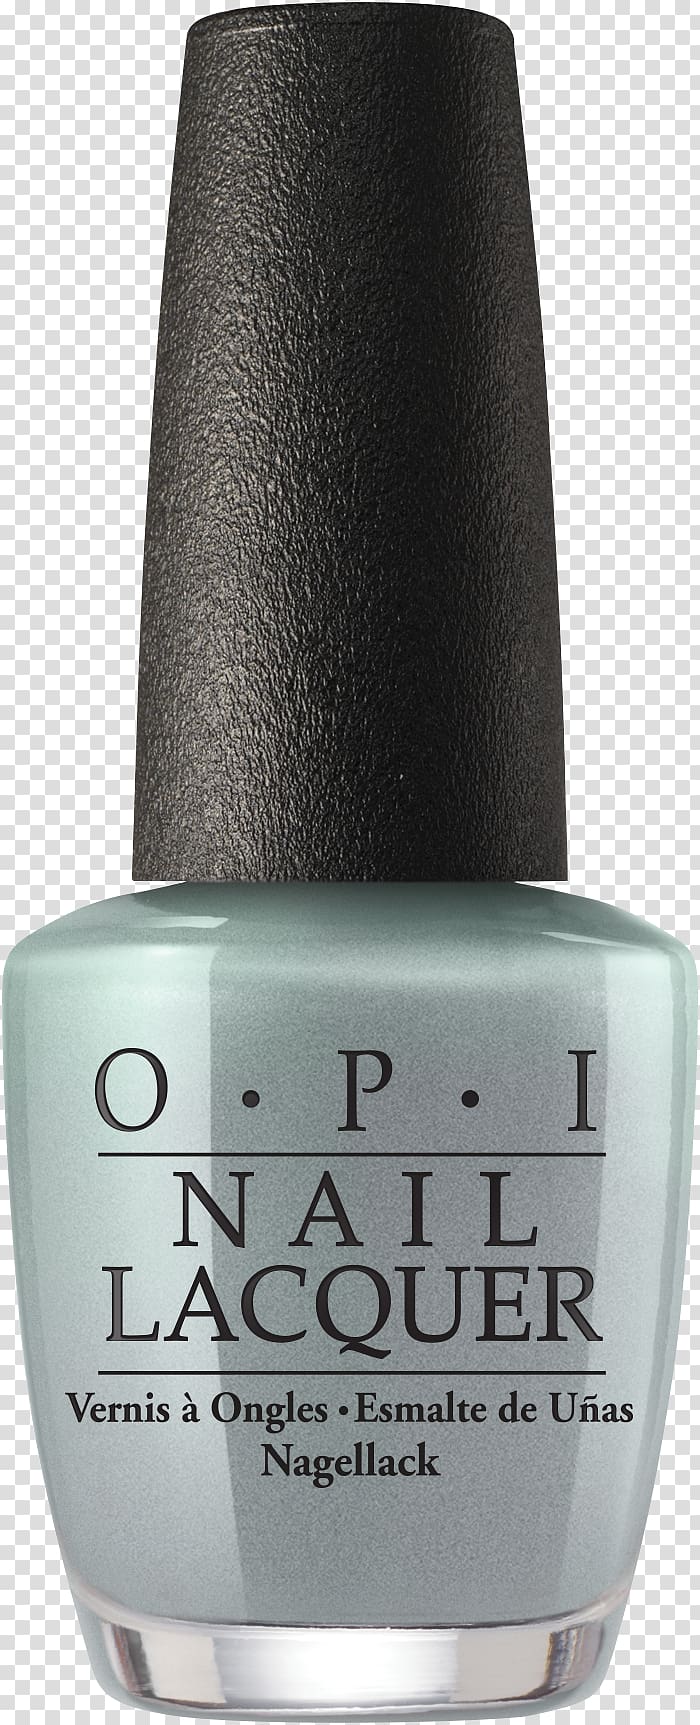 OPI Nail Lacquer OPI Products Nail Polish Cosmetics, nail polish transparent background PNG clipart